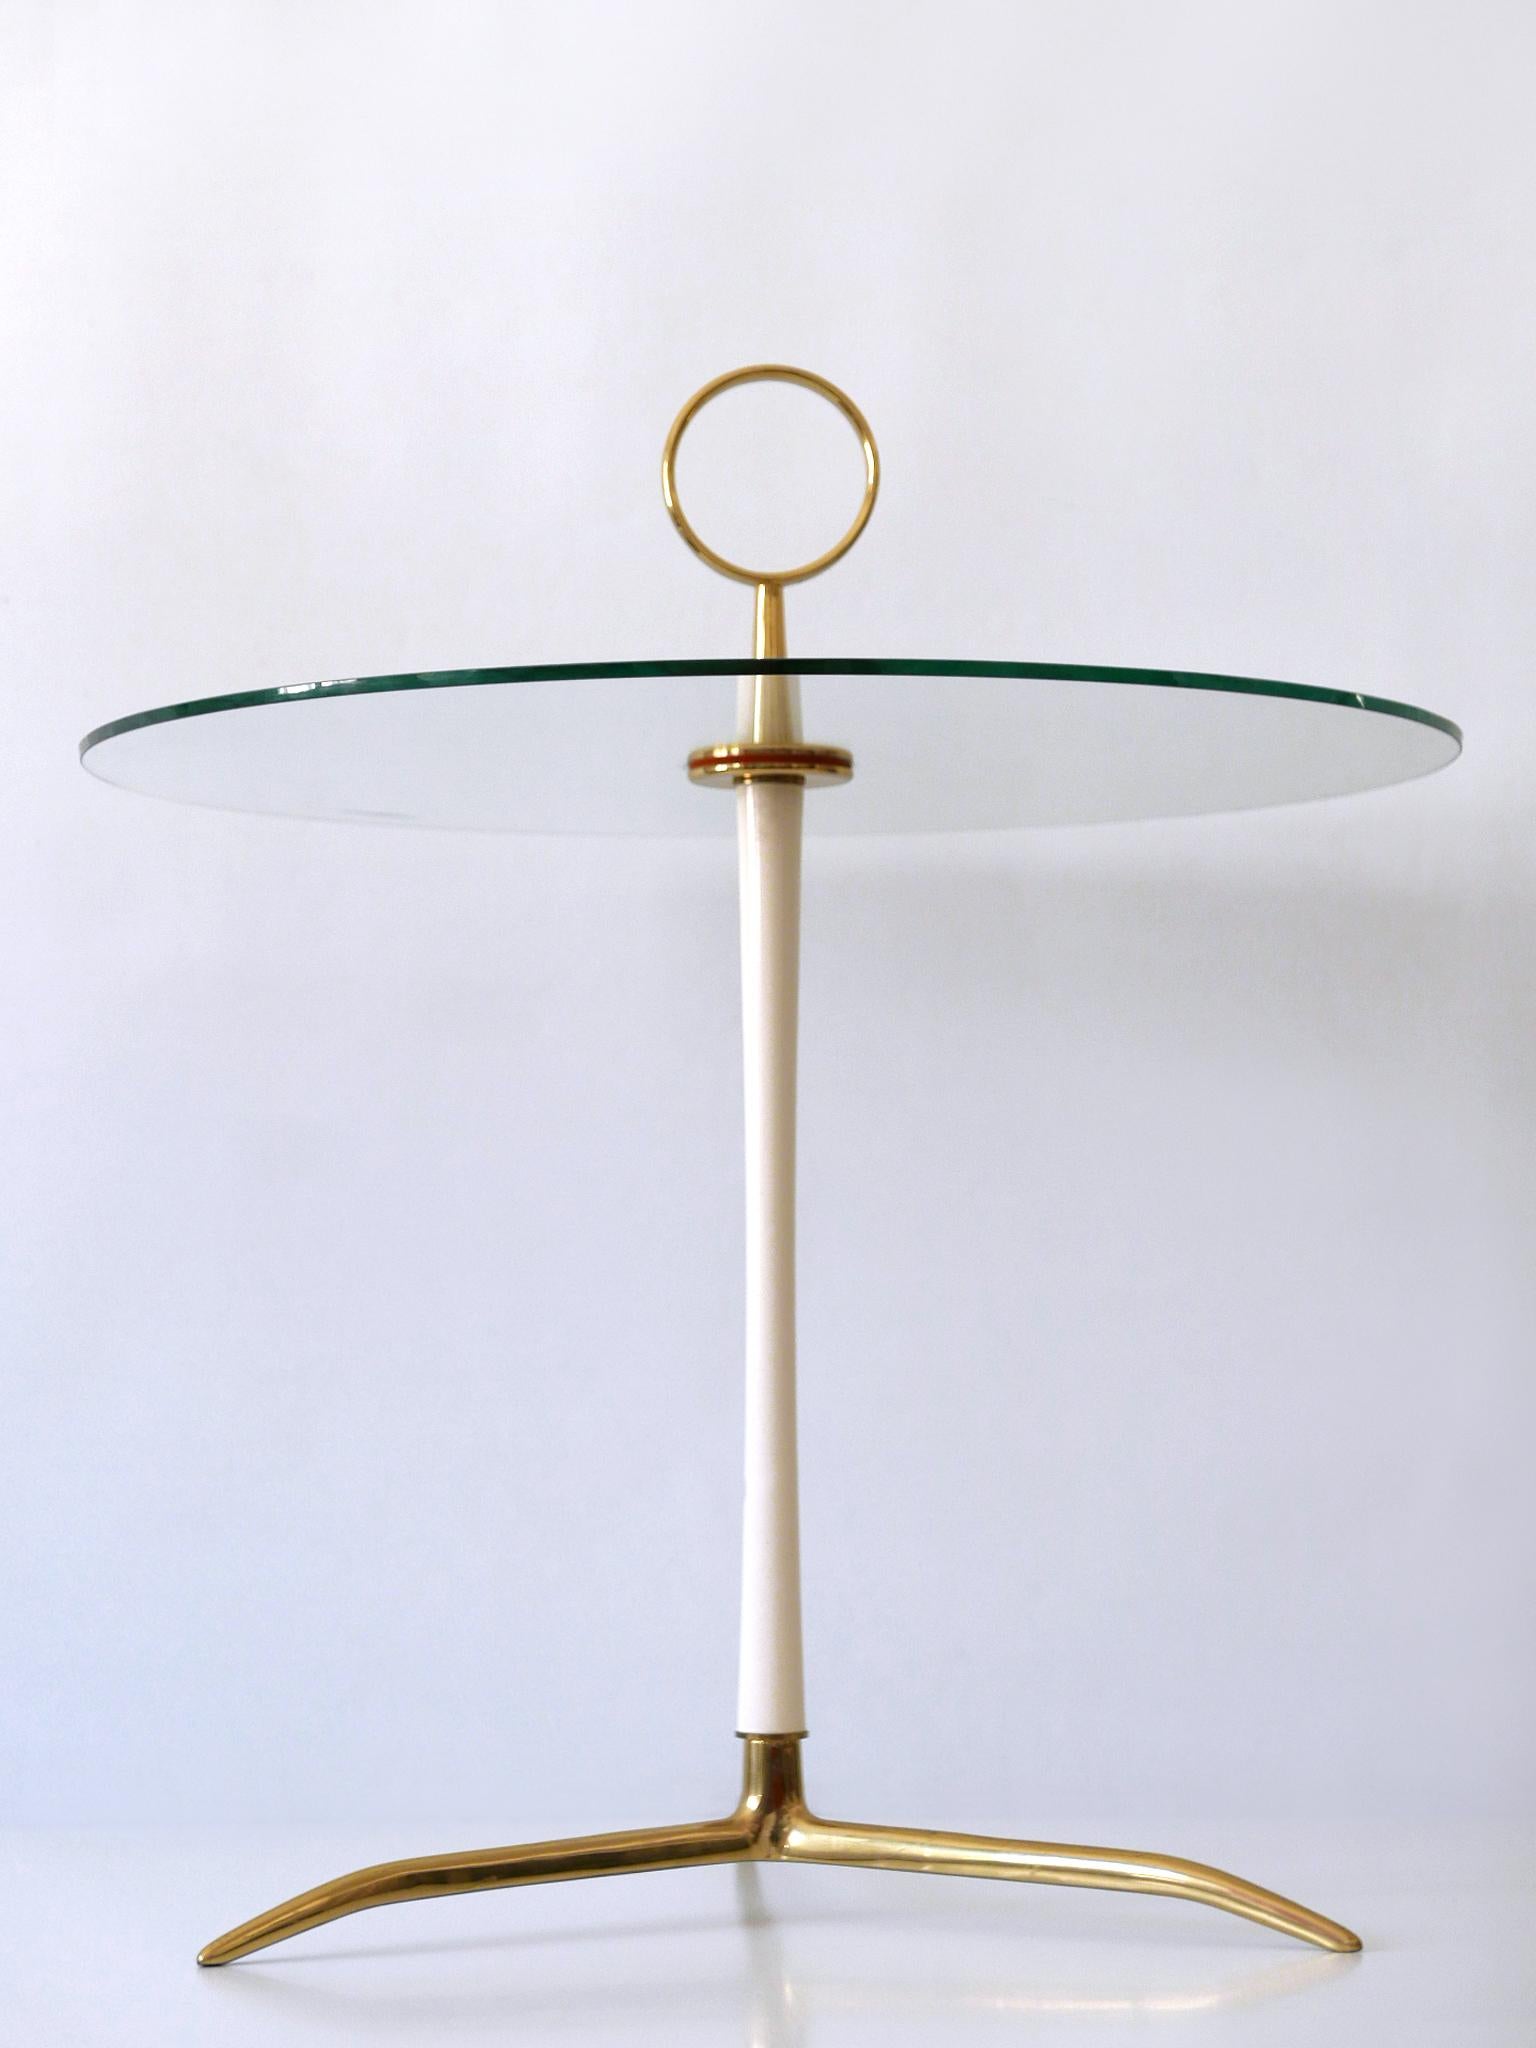 Elegant Mid-Century Modern Side Table by Vereinigte Werkstätten Germany 1950s For Sale 6